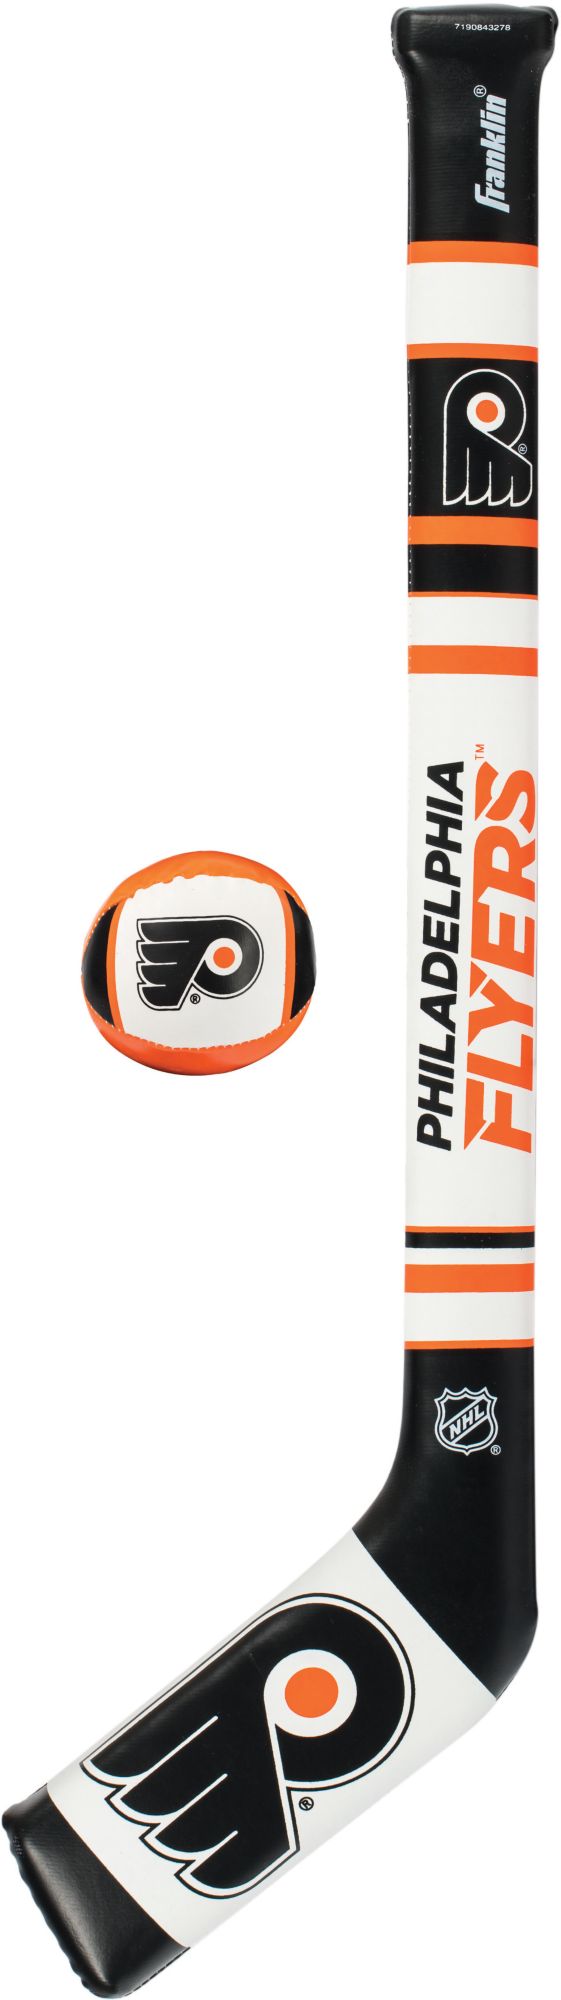 Bleacher Creatures Philadelphia Flyers Bundle: Carter Hart and Gritty Alternate  Jersey 10 Plush Figures